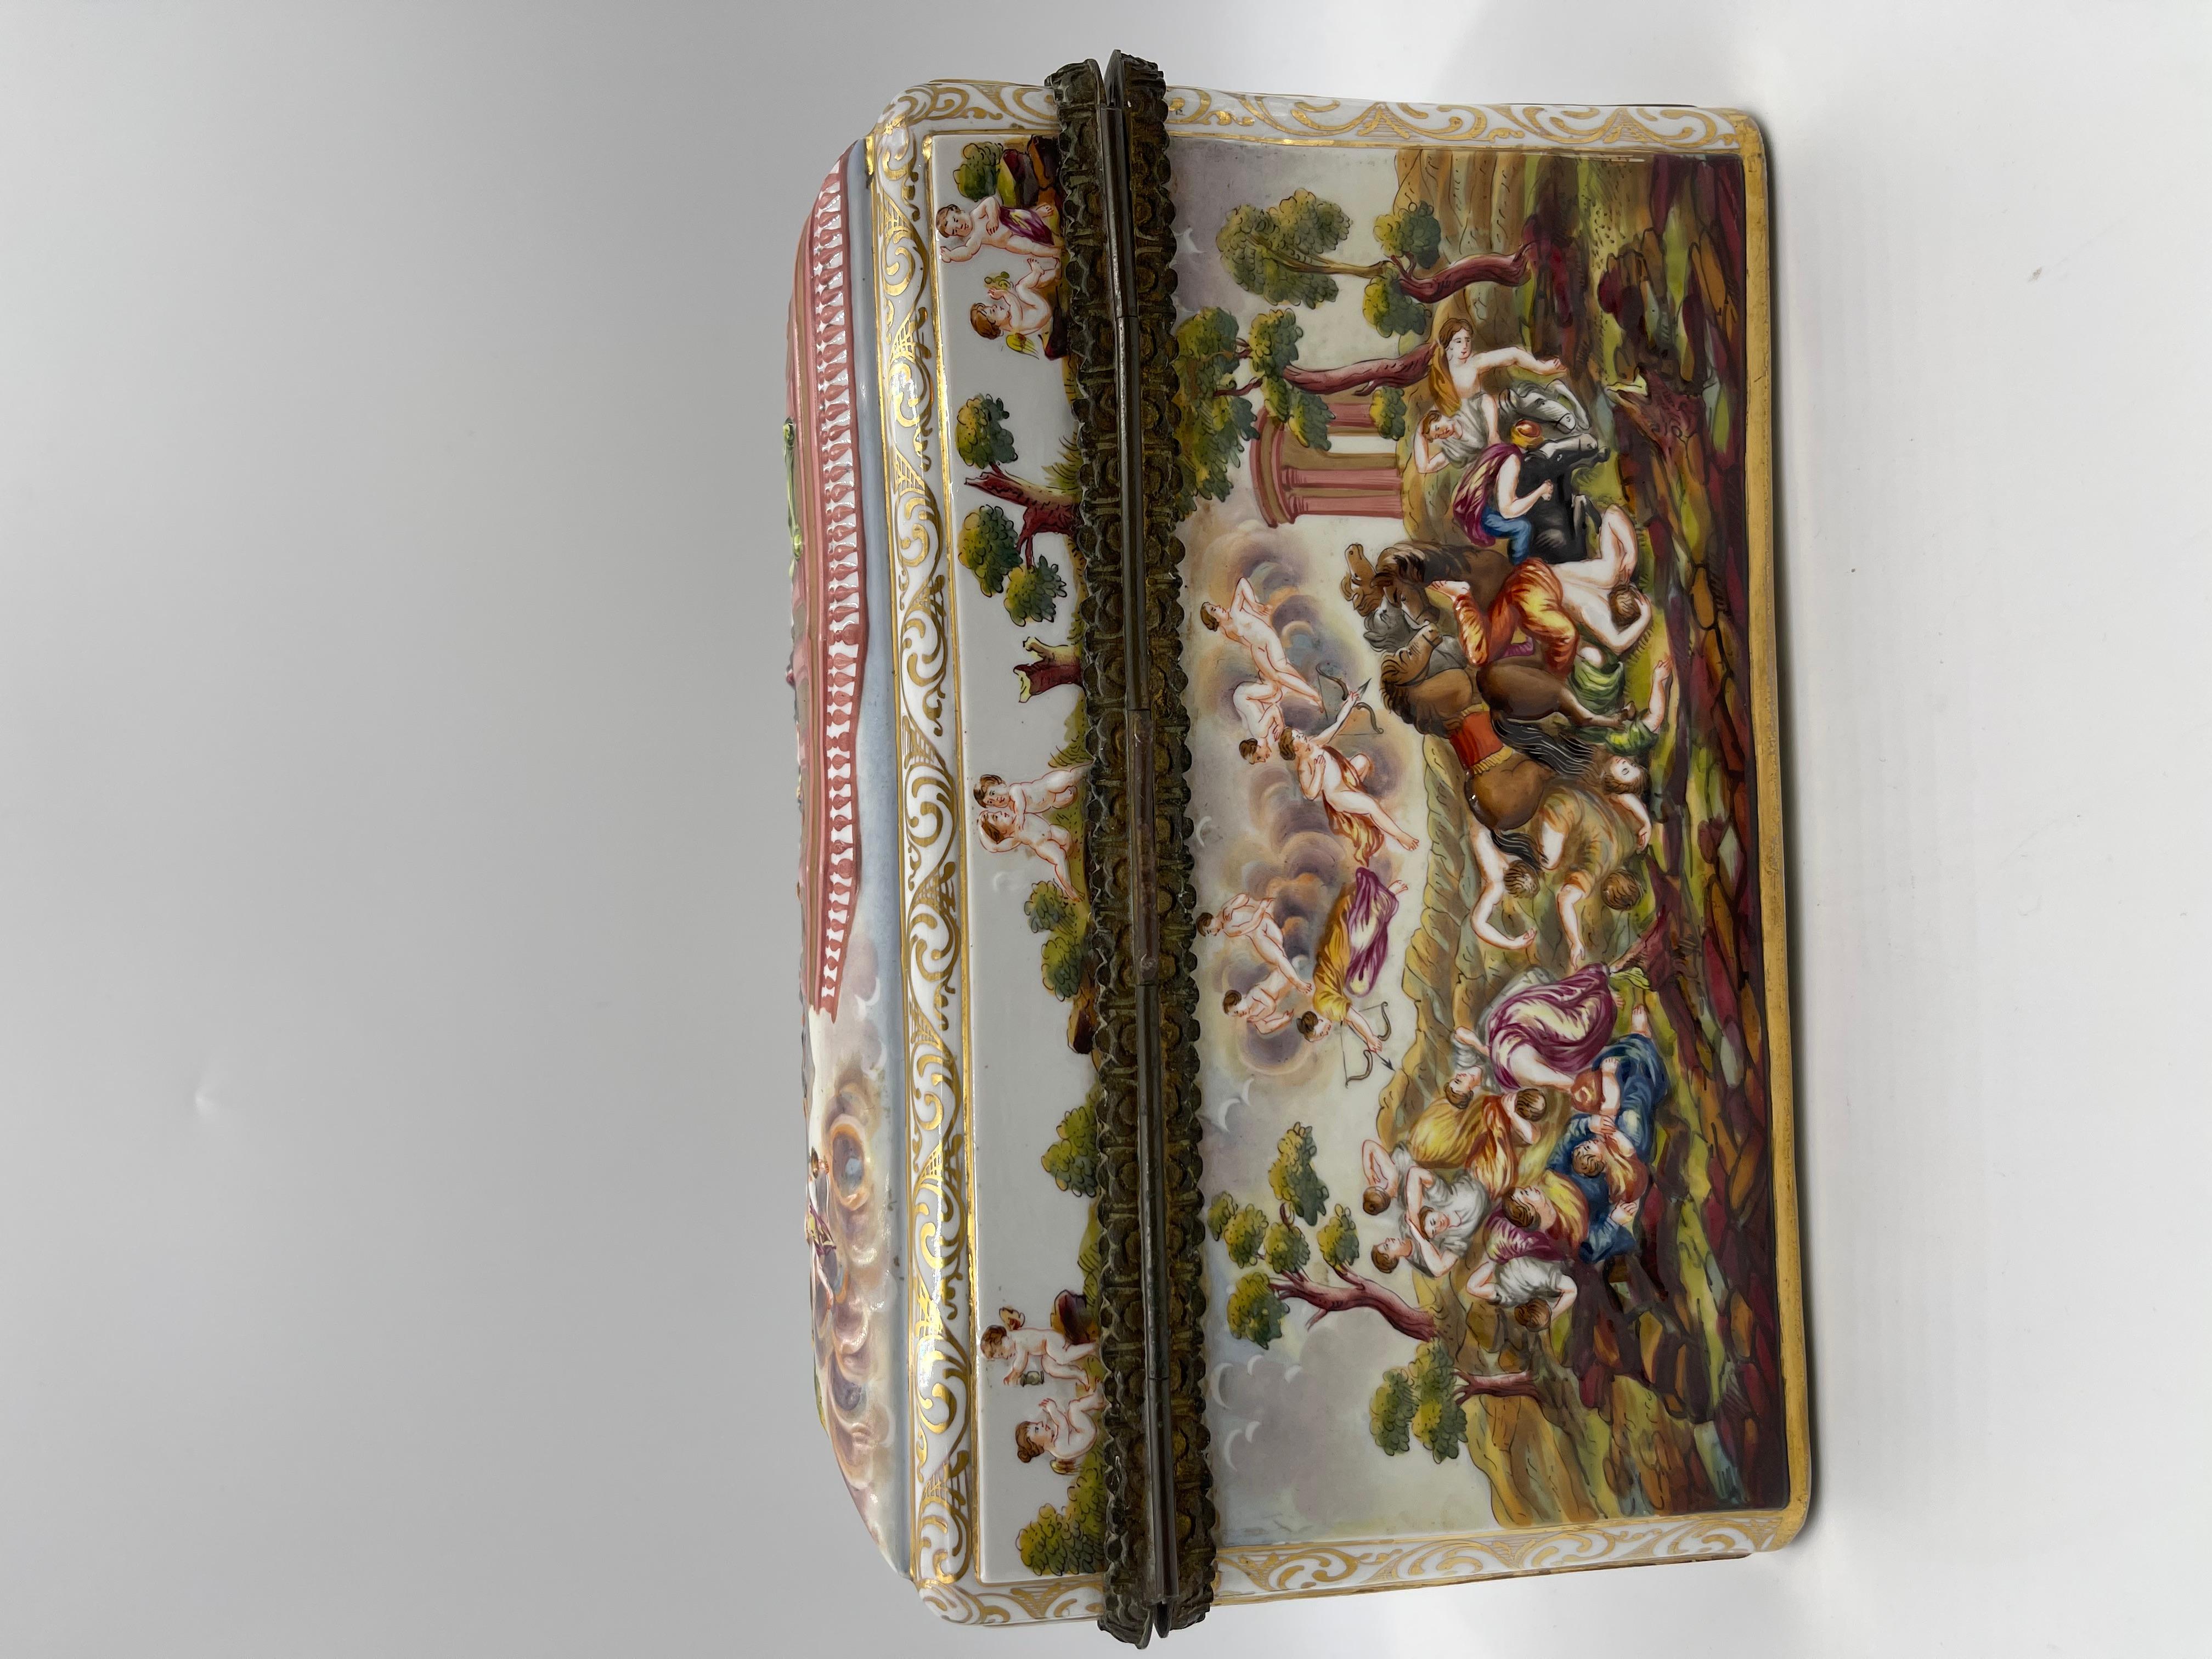 Italian Rare Large 19th C. Capodimonte Porcelain Box / Table Casket For Sale